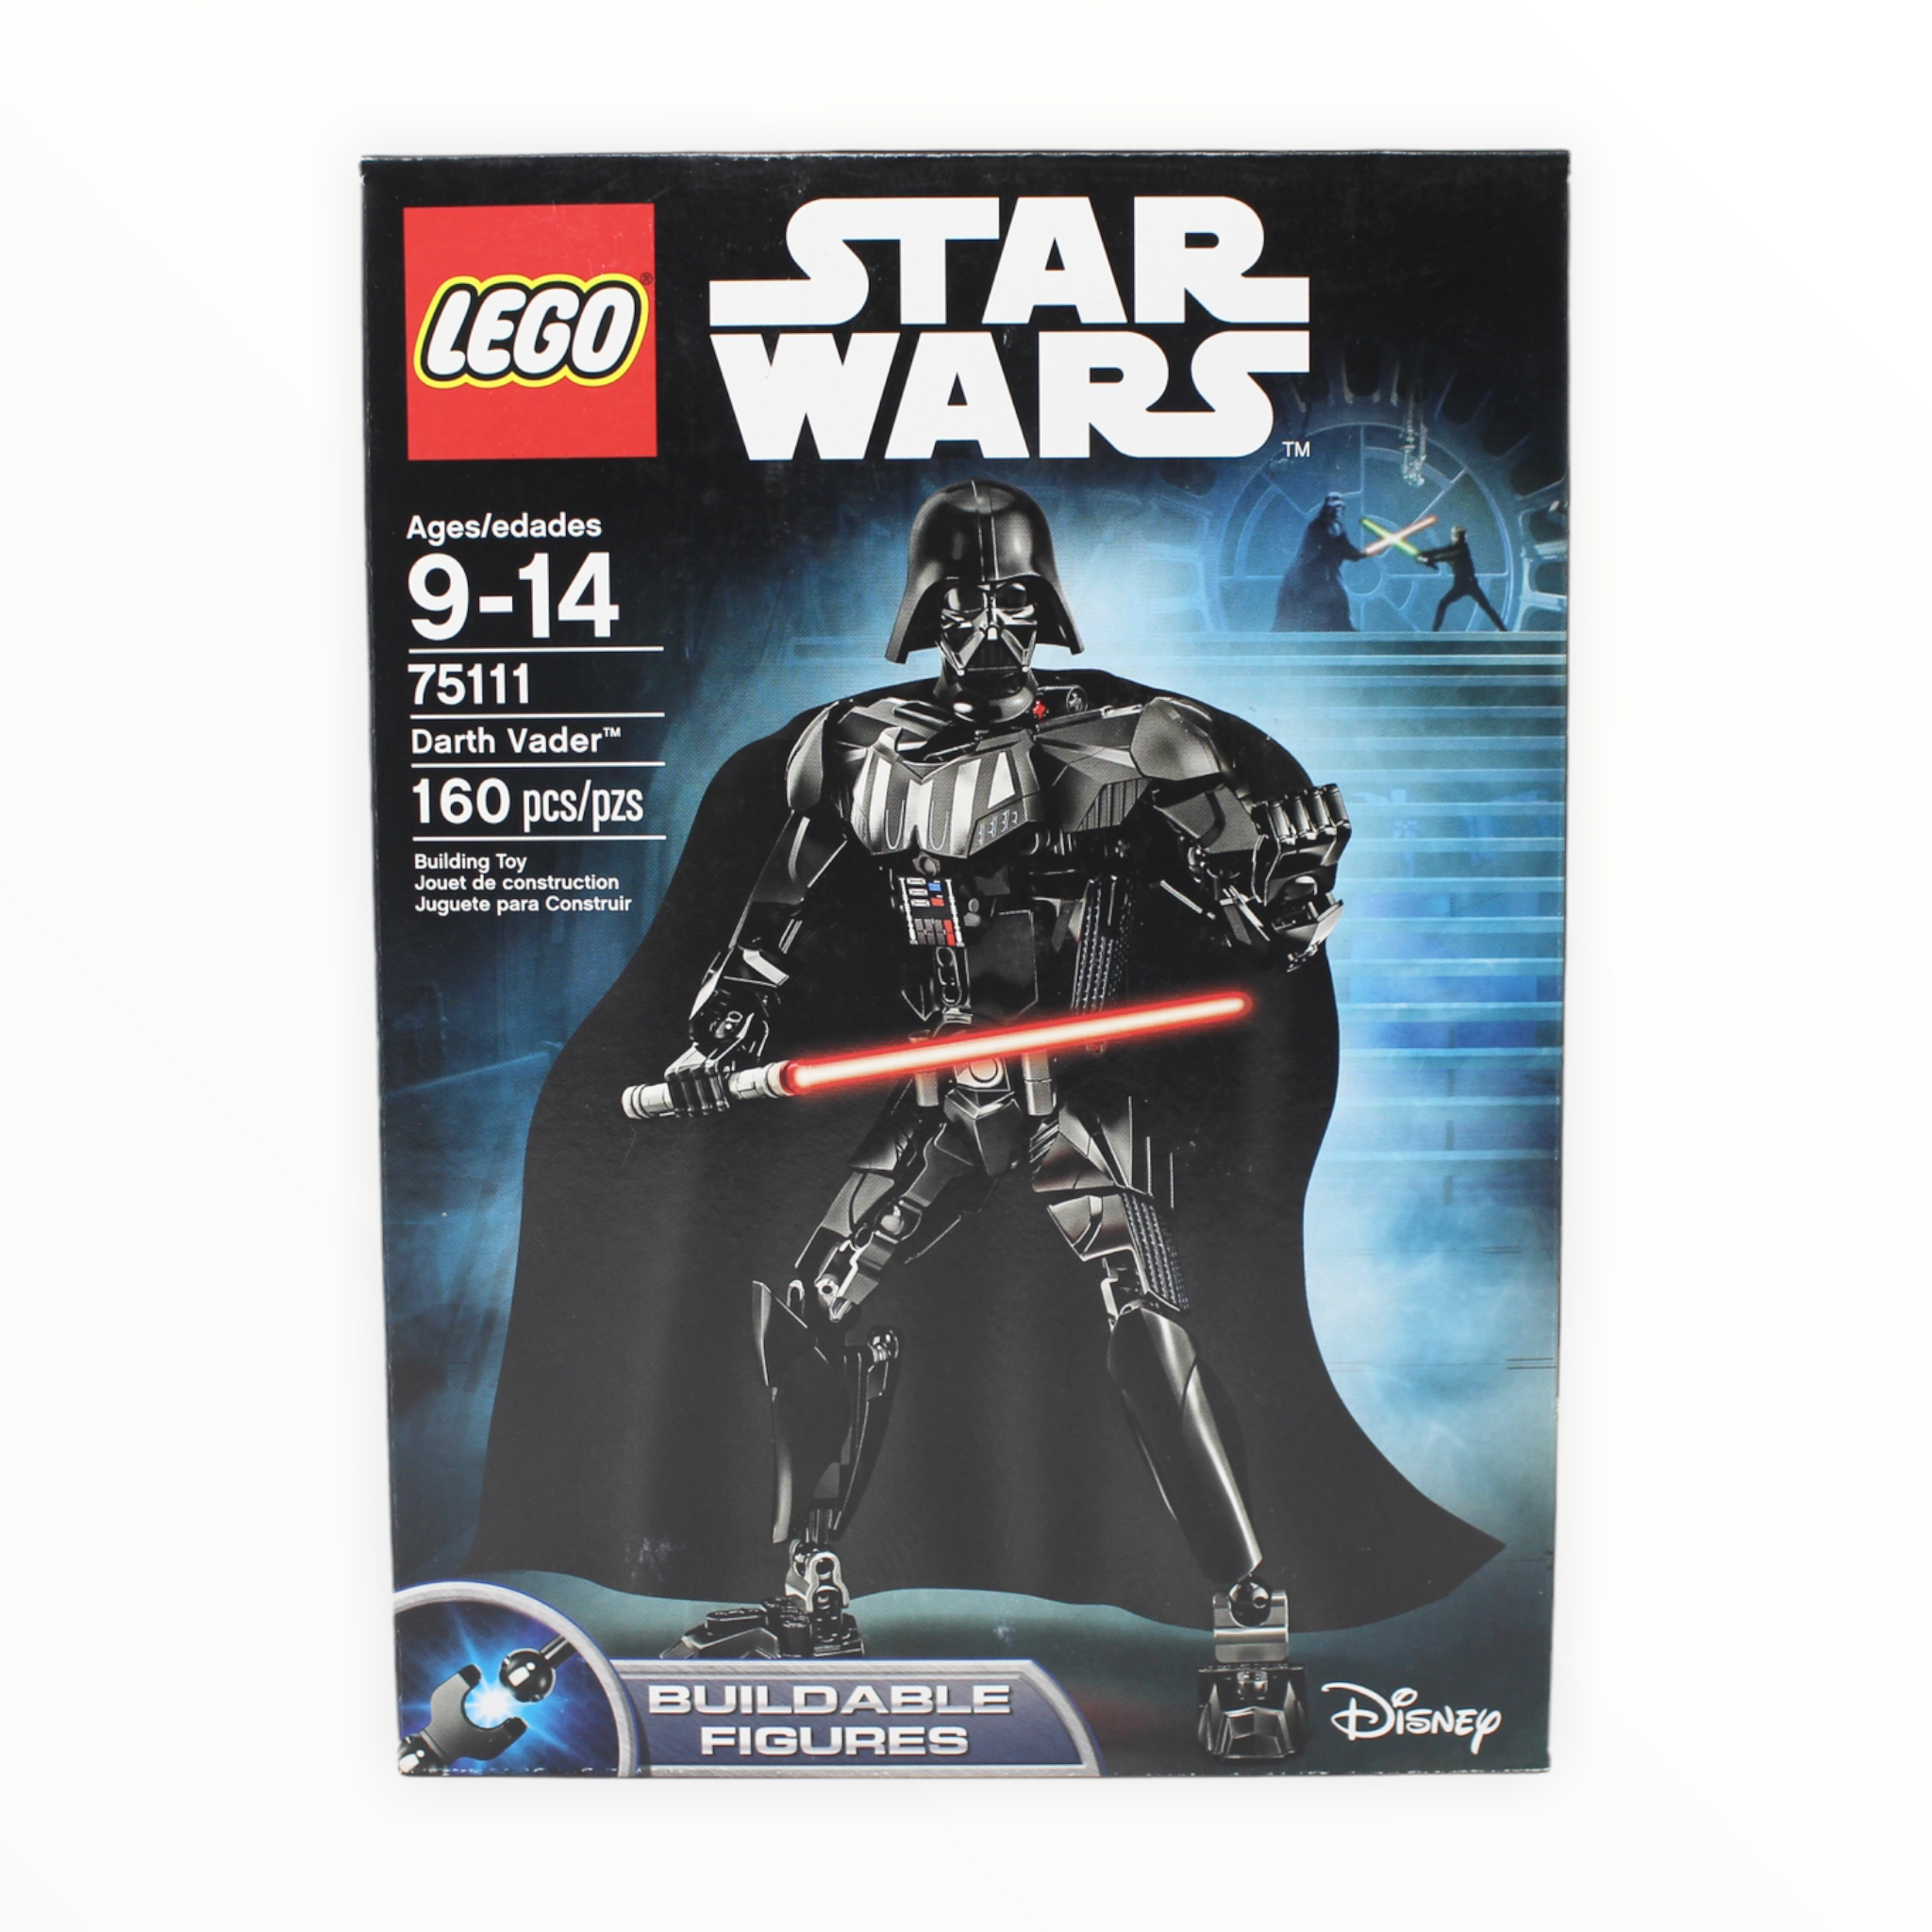 Retired Set 75111 Star Wars Buildable Figures Darth Vader